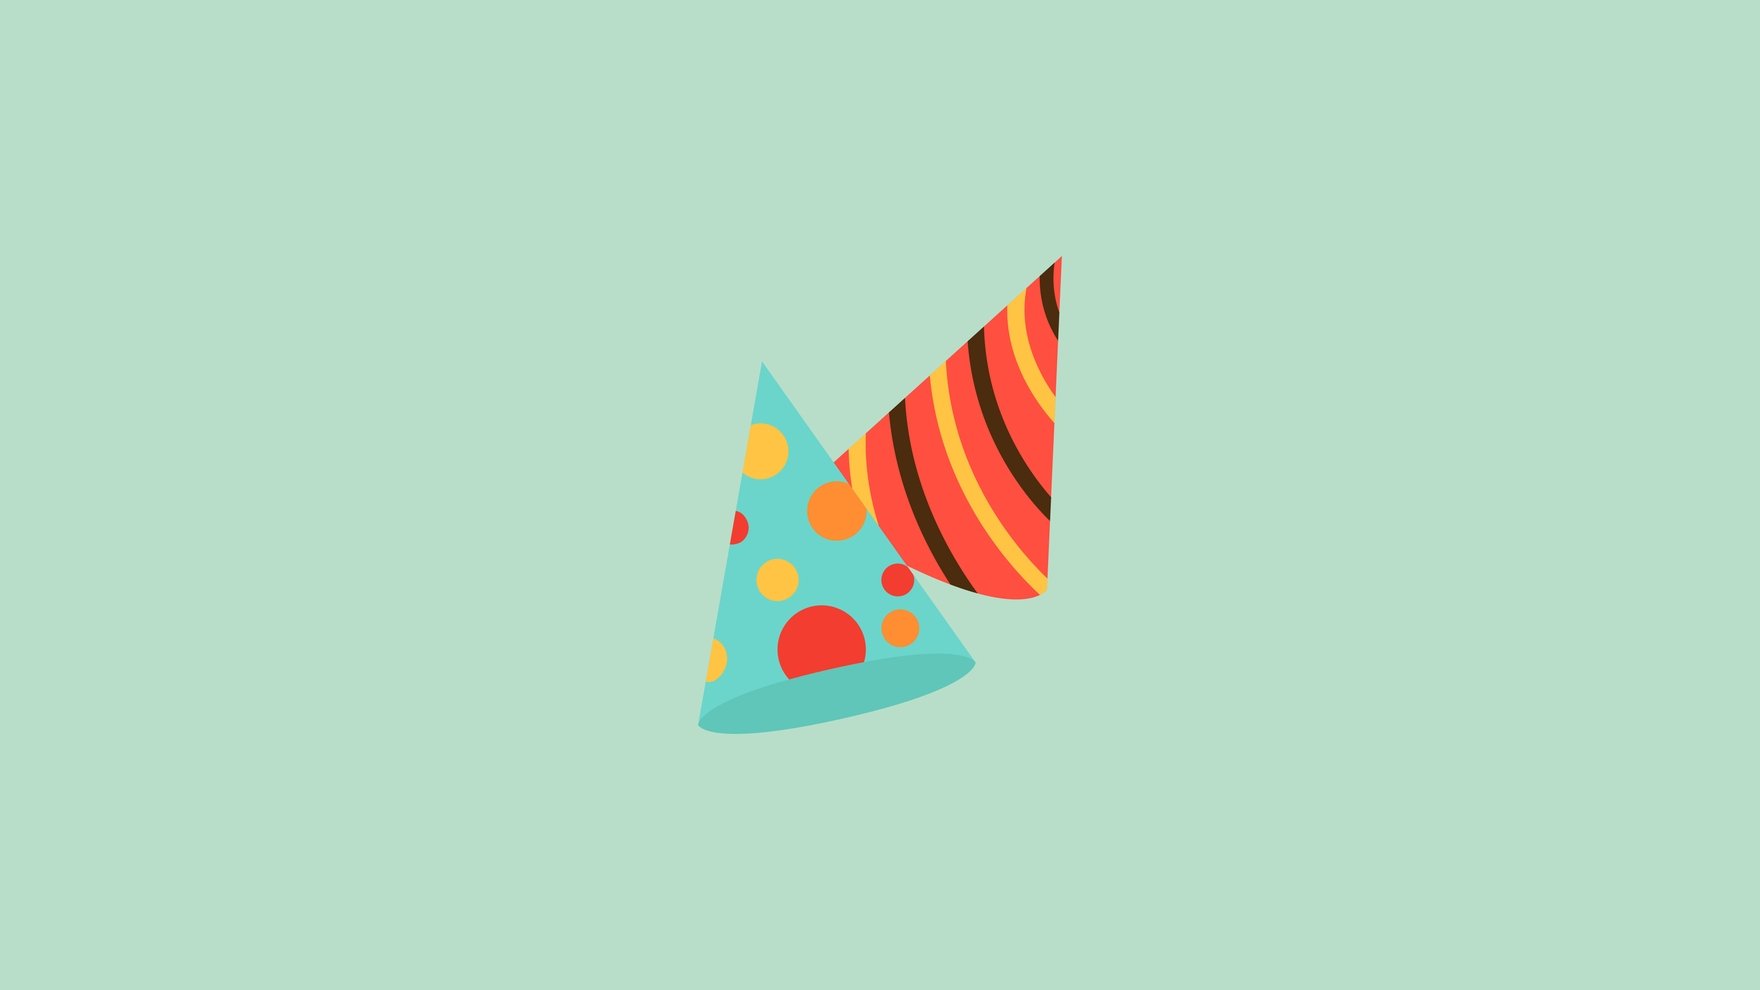 Free Simple Birthday Background - EPS, Illustrator, JPG, PNG, SVG |  